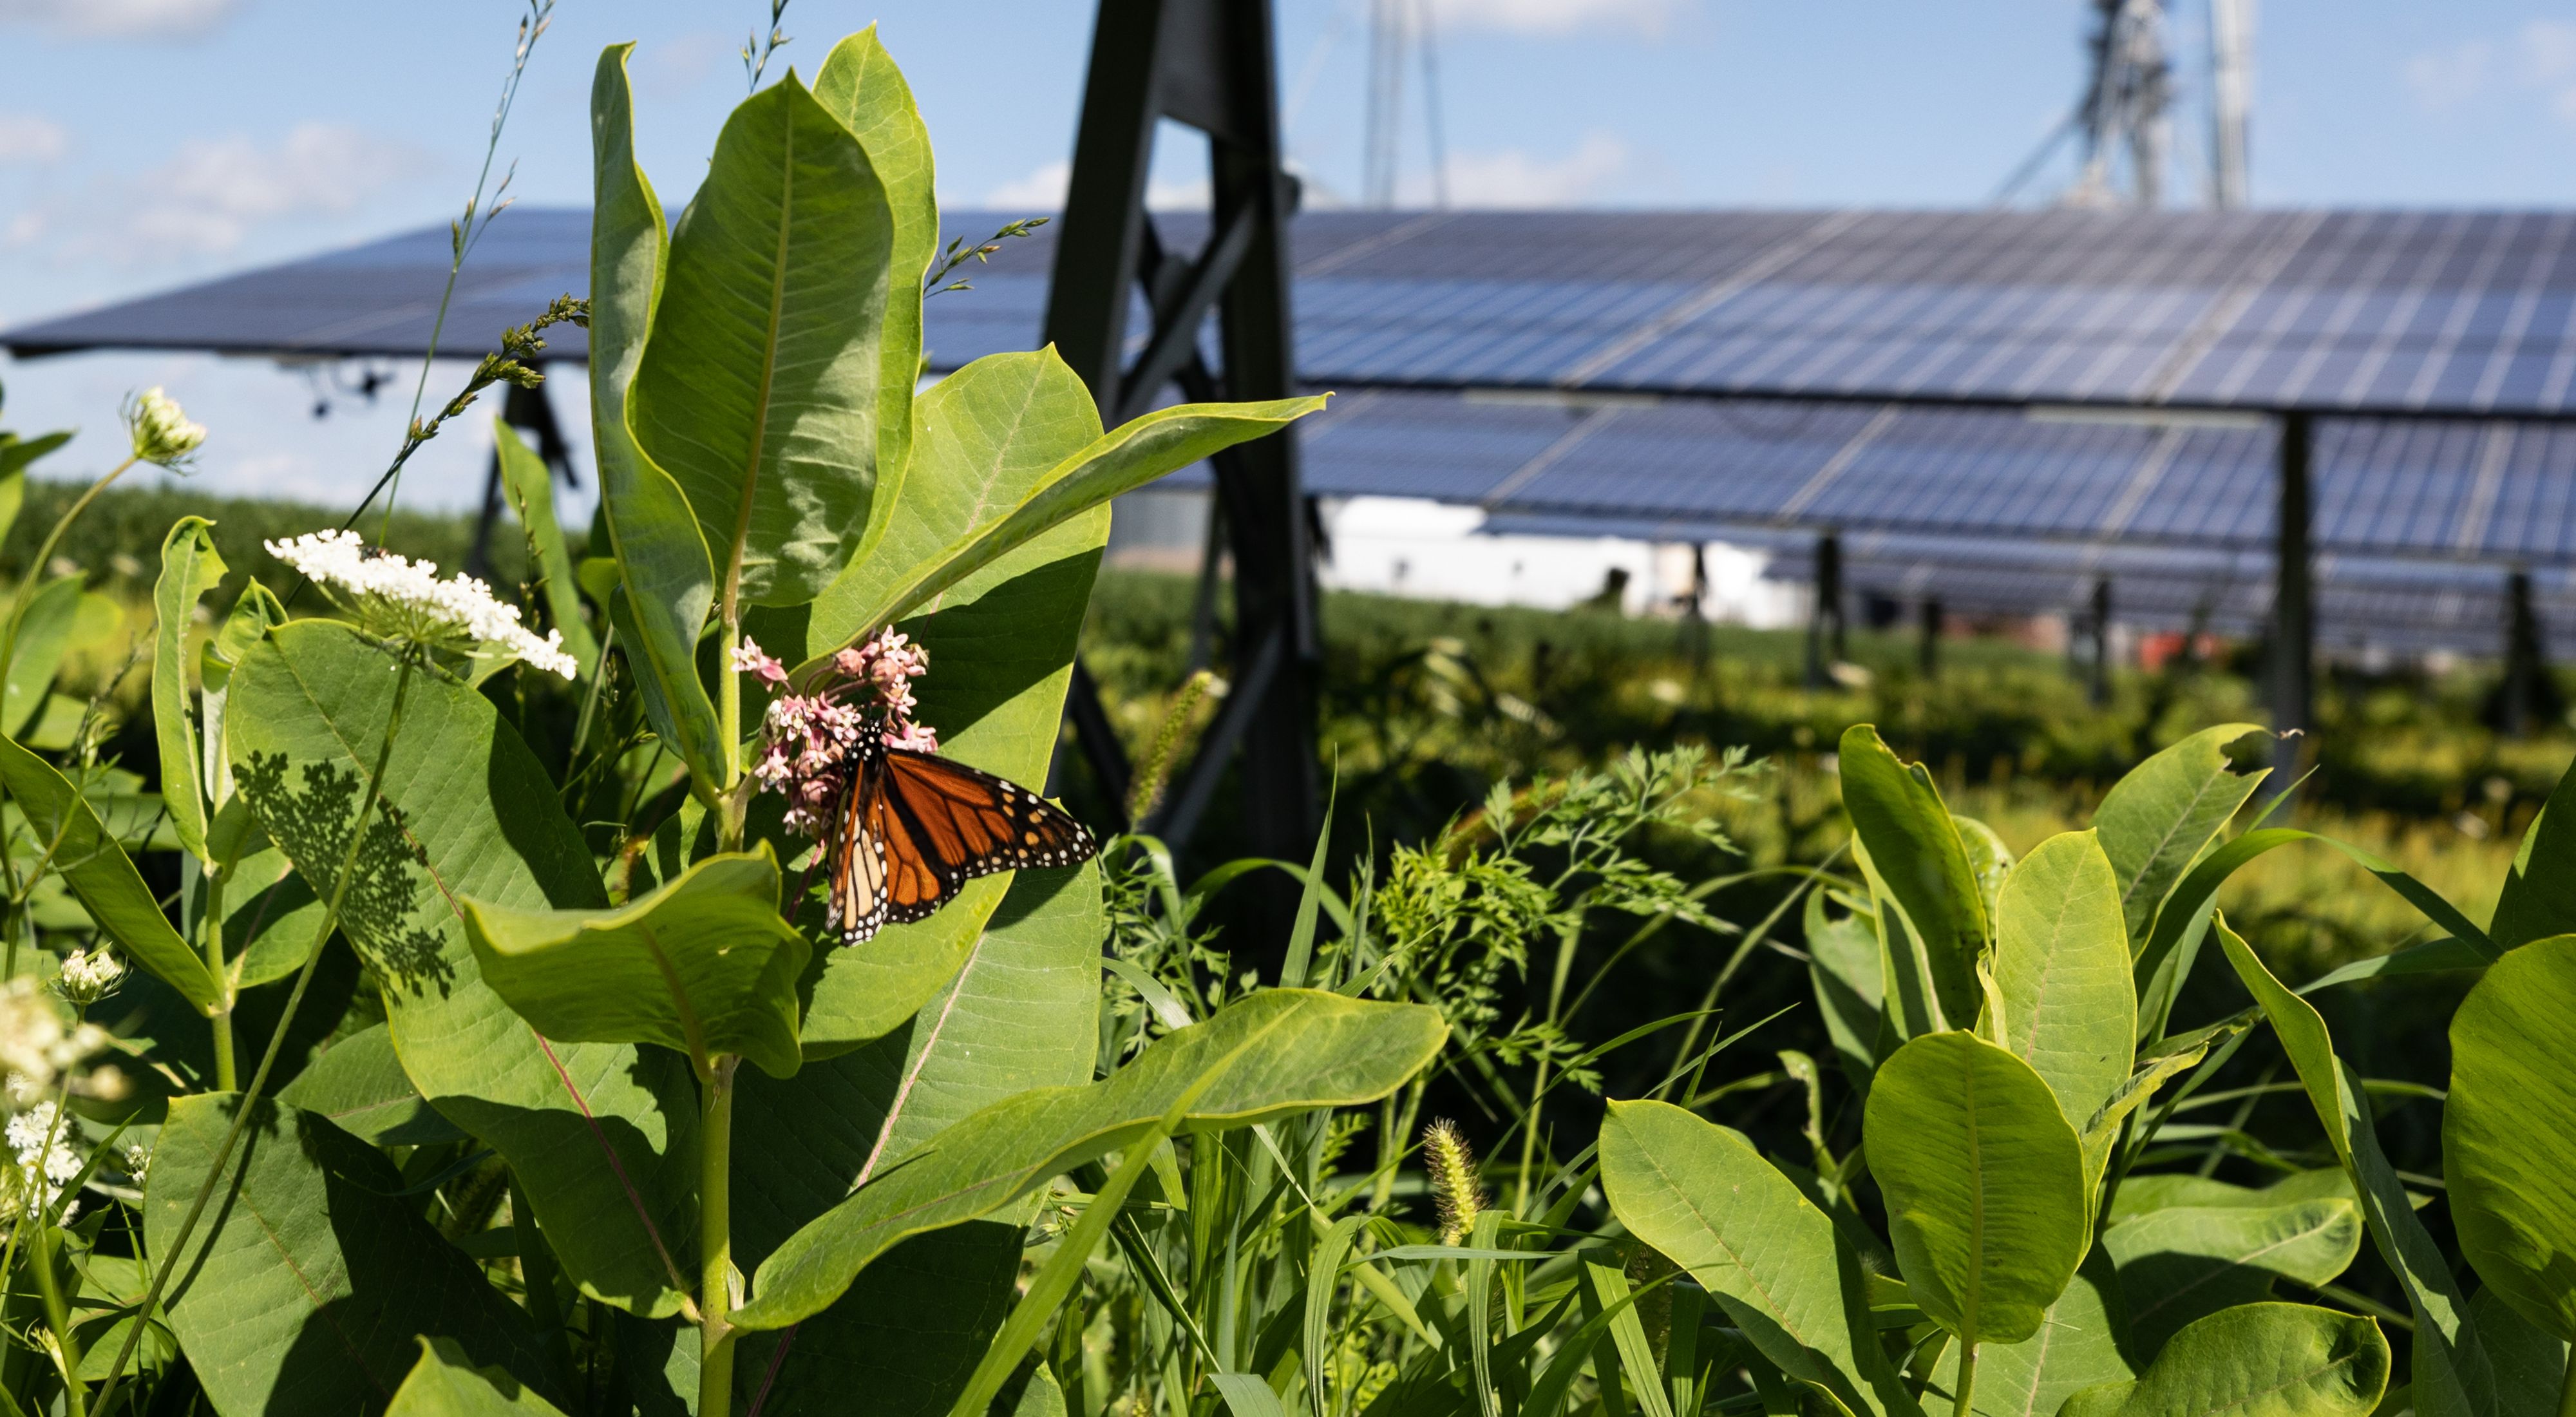 A monarch butterfly fluttering around flowers near solar panels.